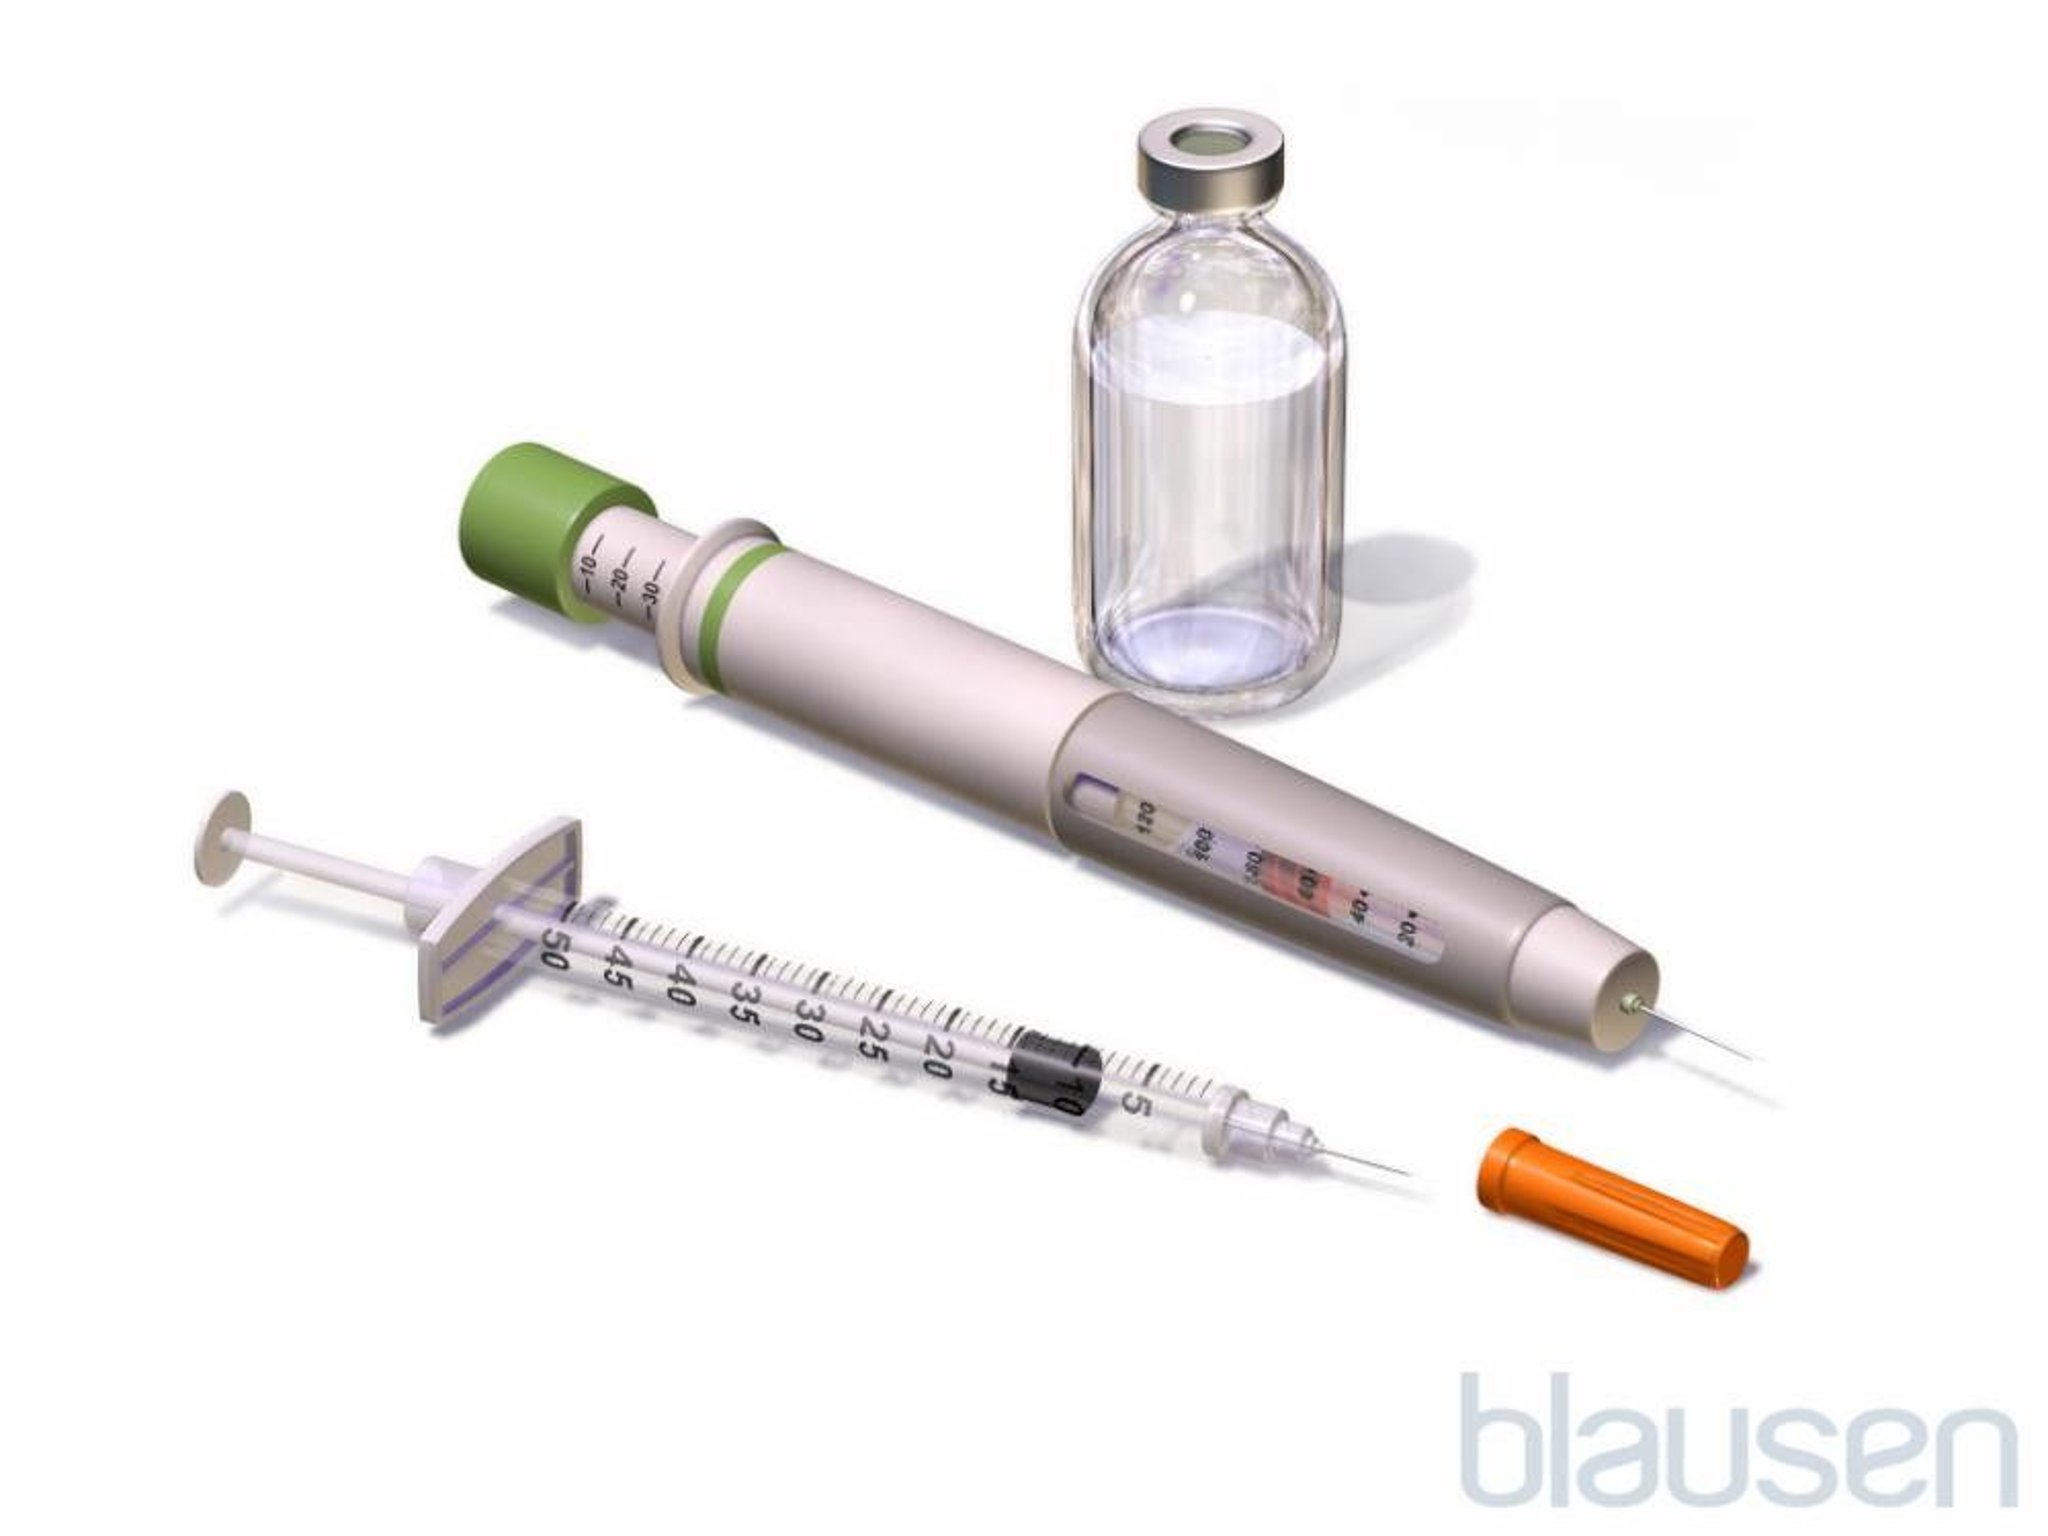 Insulin Syringe and Insulin Pen